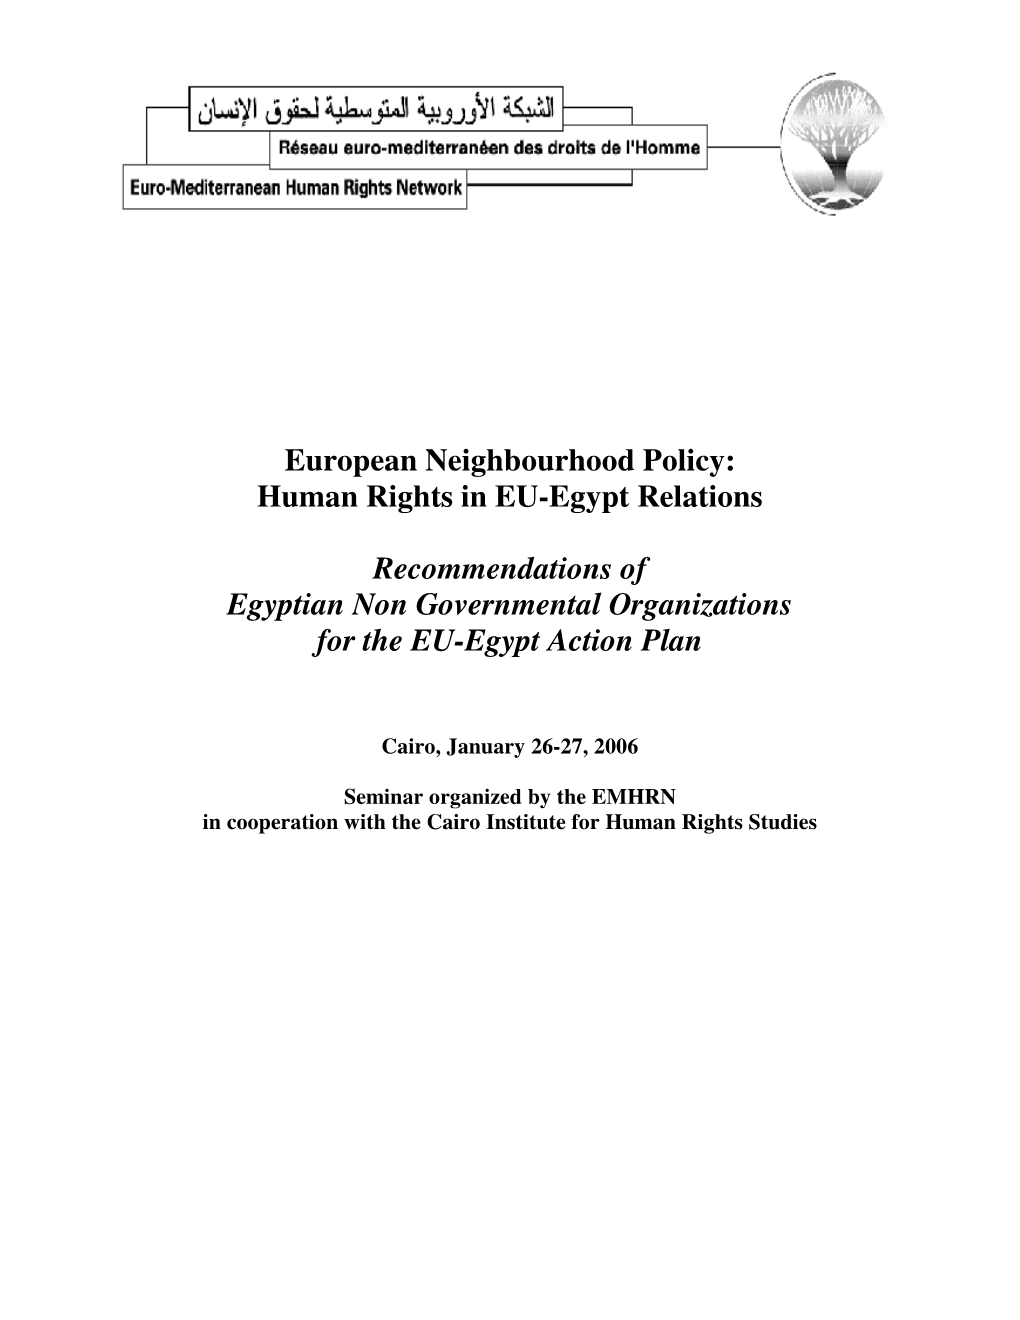 European Neighbourhood Policy: Human Rights in EU-Egypt Relations